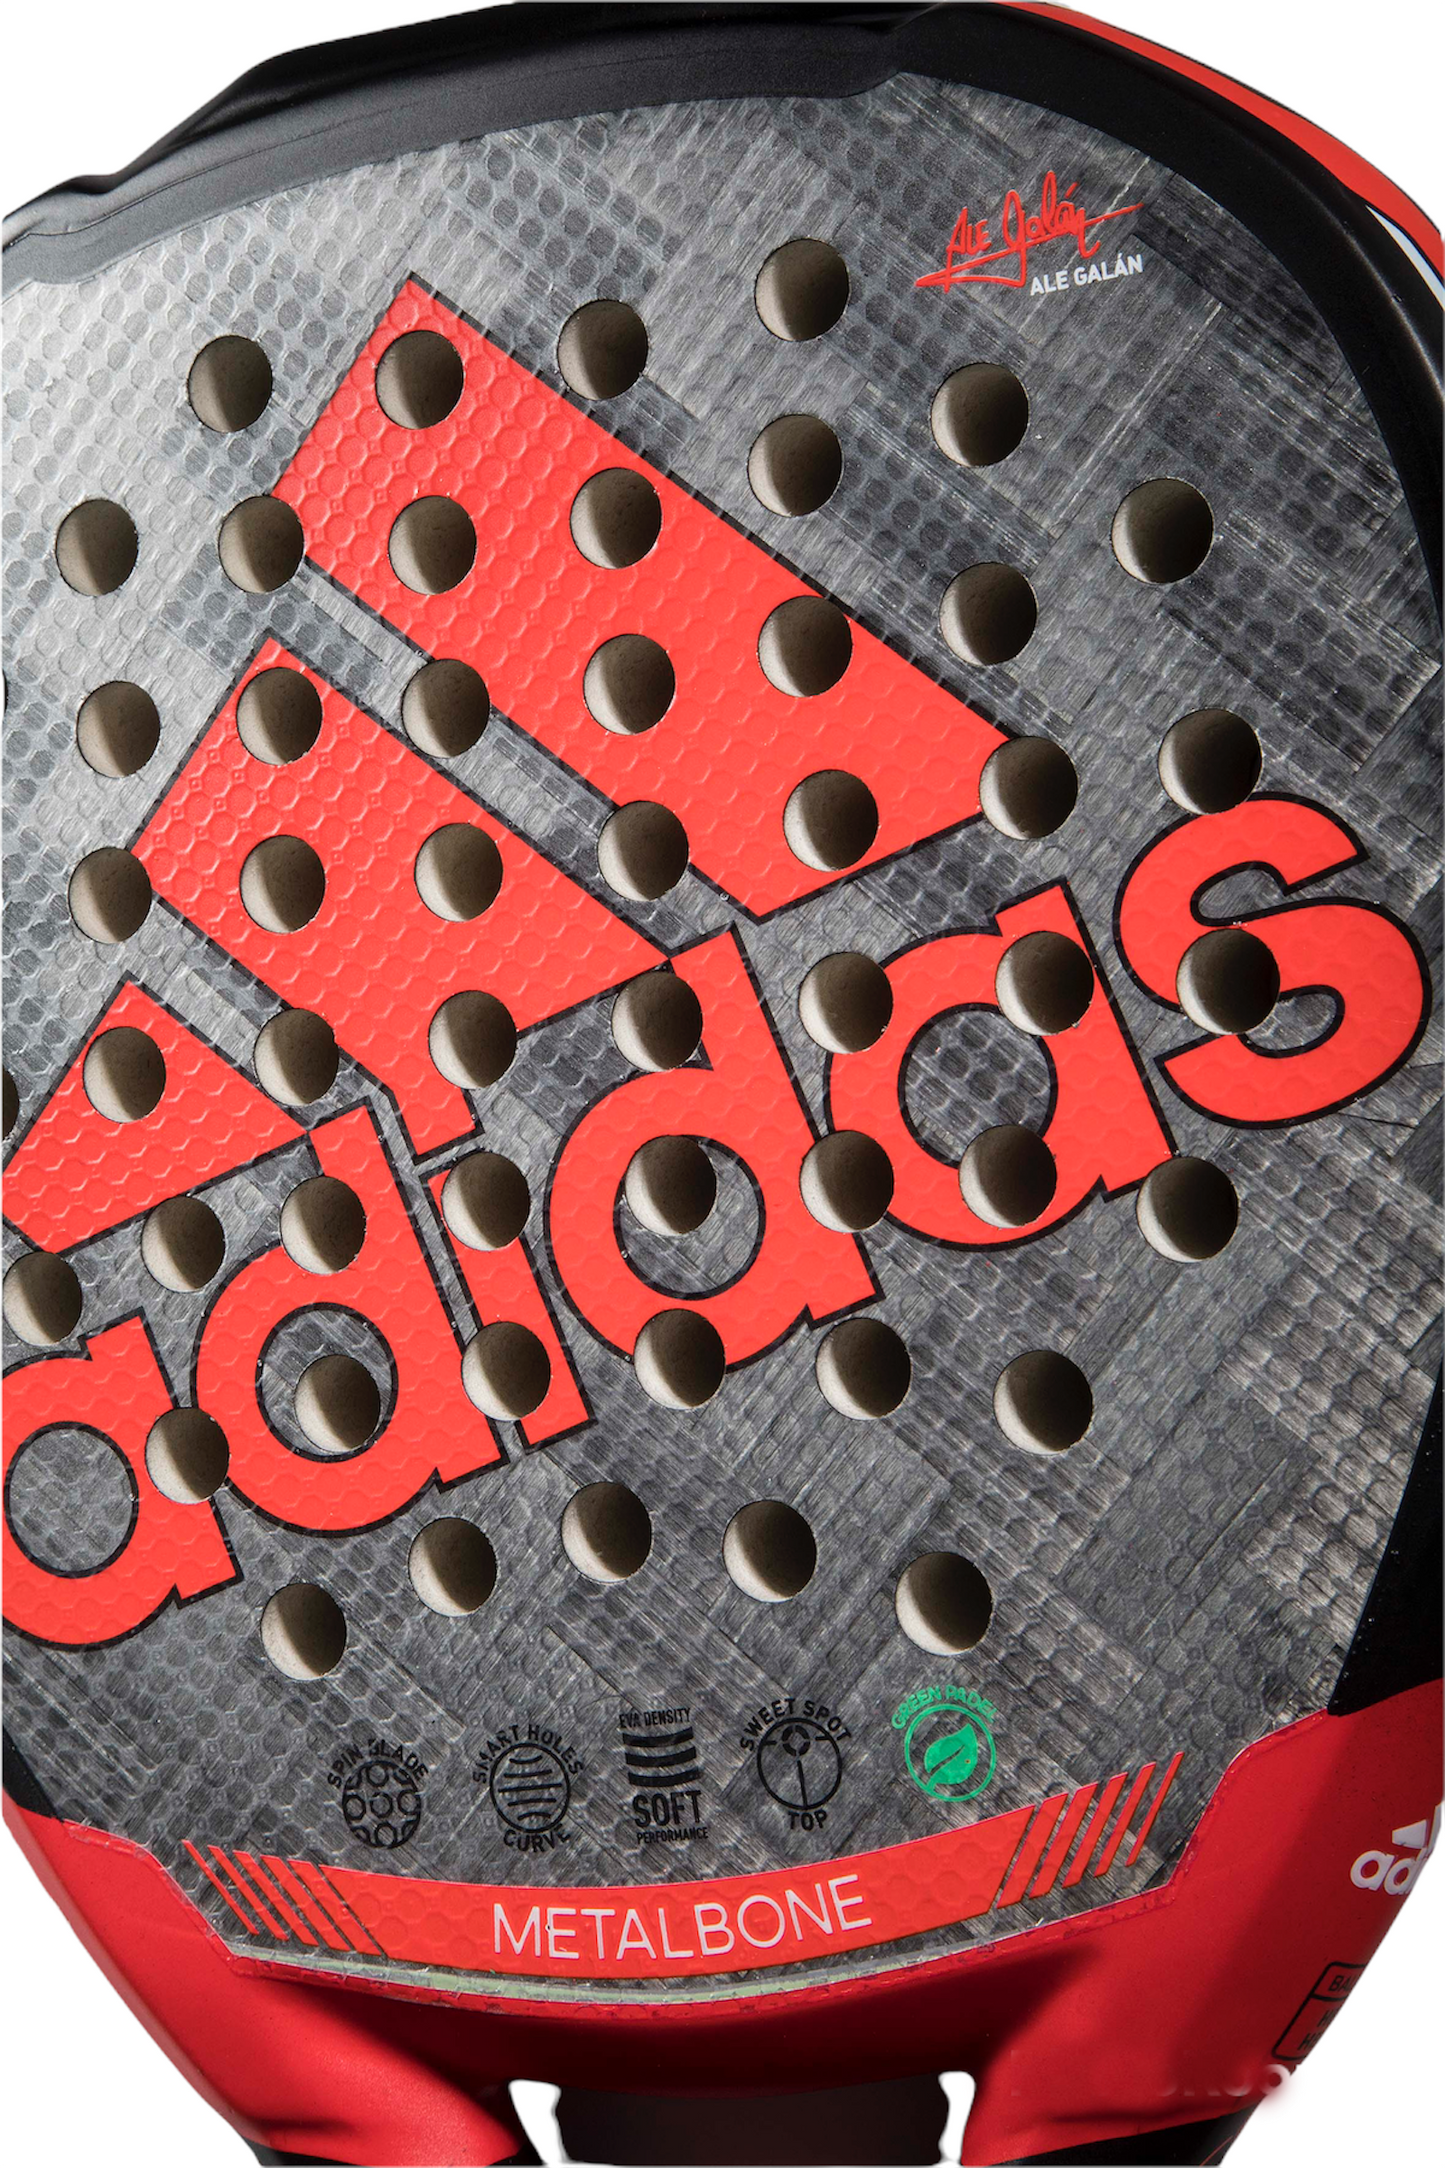 Adidas- Metalbone 3.1 - Collezione 2022